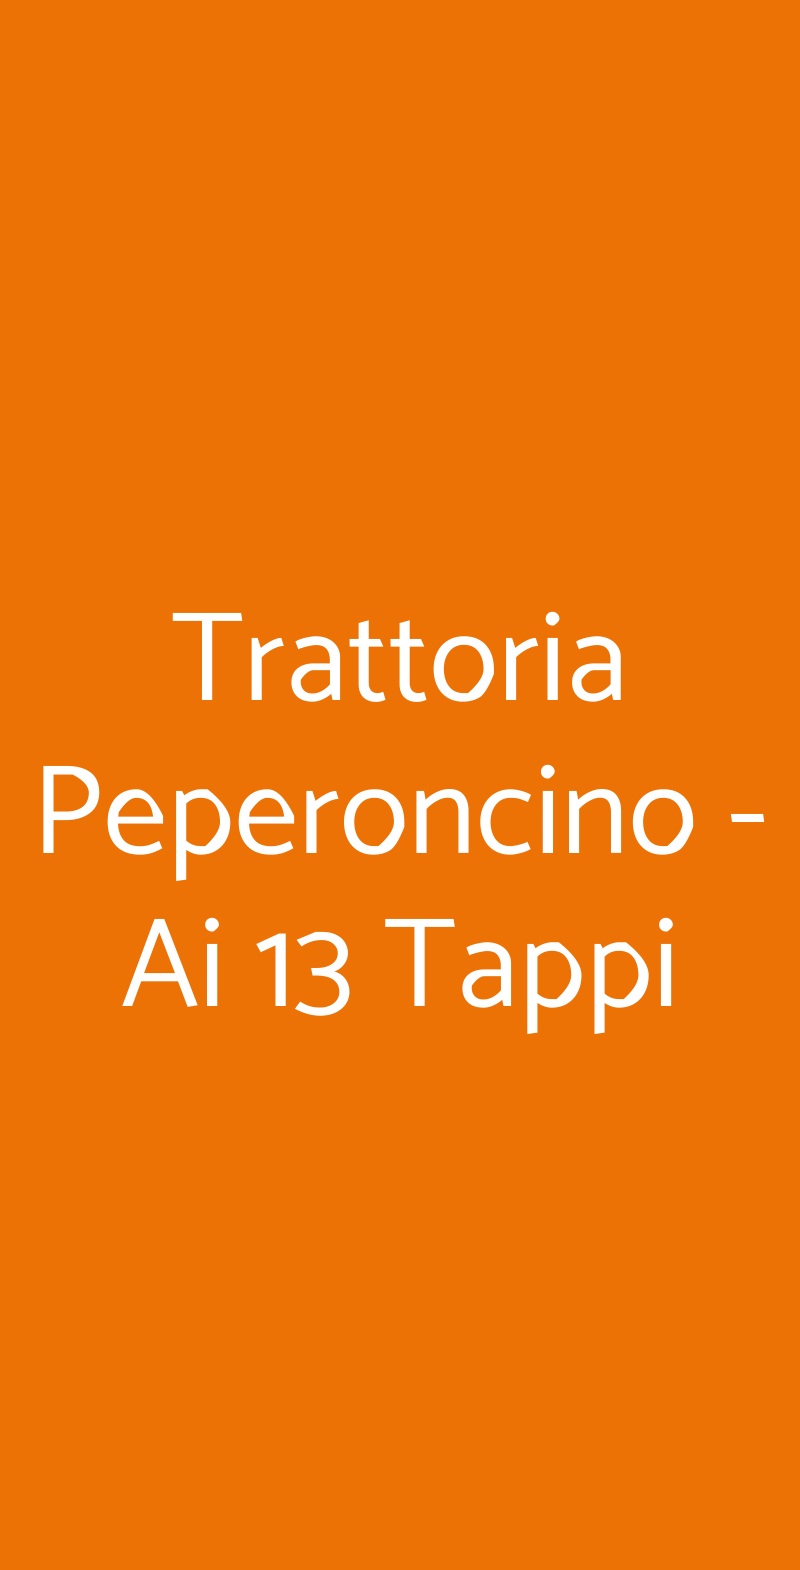 Trattoria Peperoncino - Ai 13 Tappi Firenze menù 1 pagina